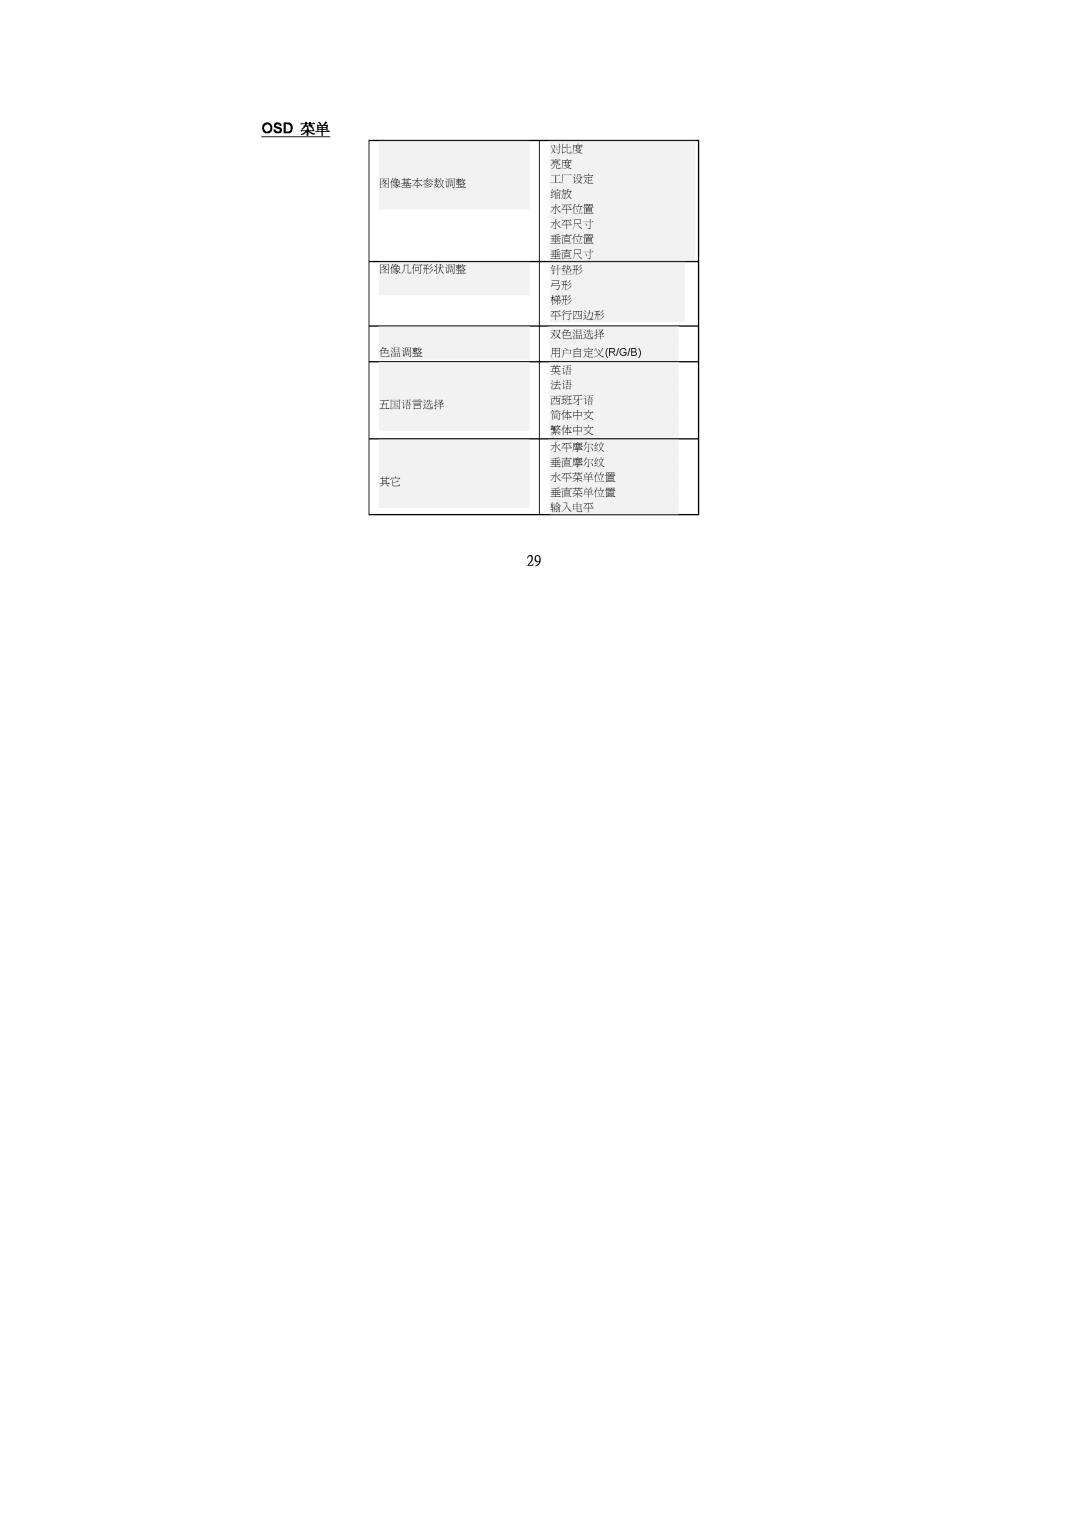 Philips 105S5 manual Osd 菜单, 用户自定义r/G/B 